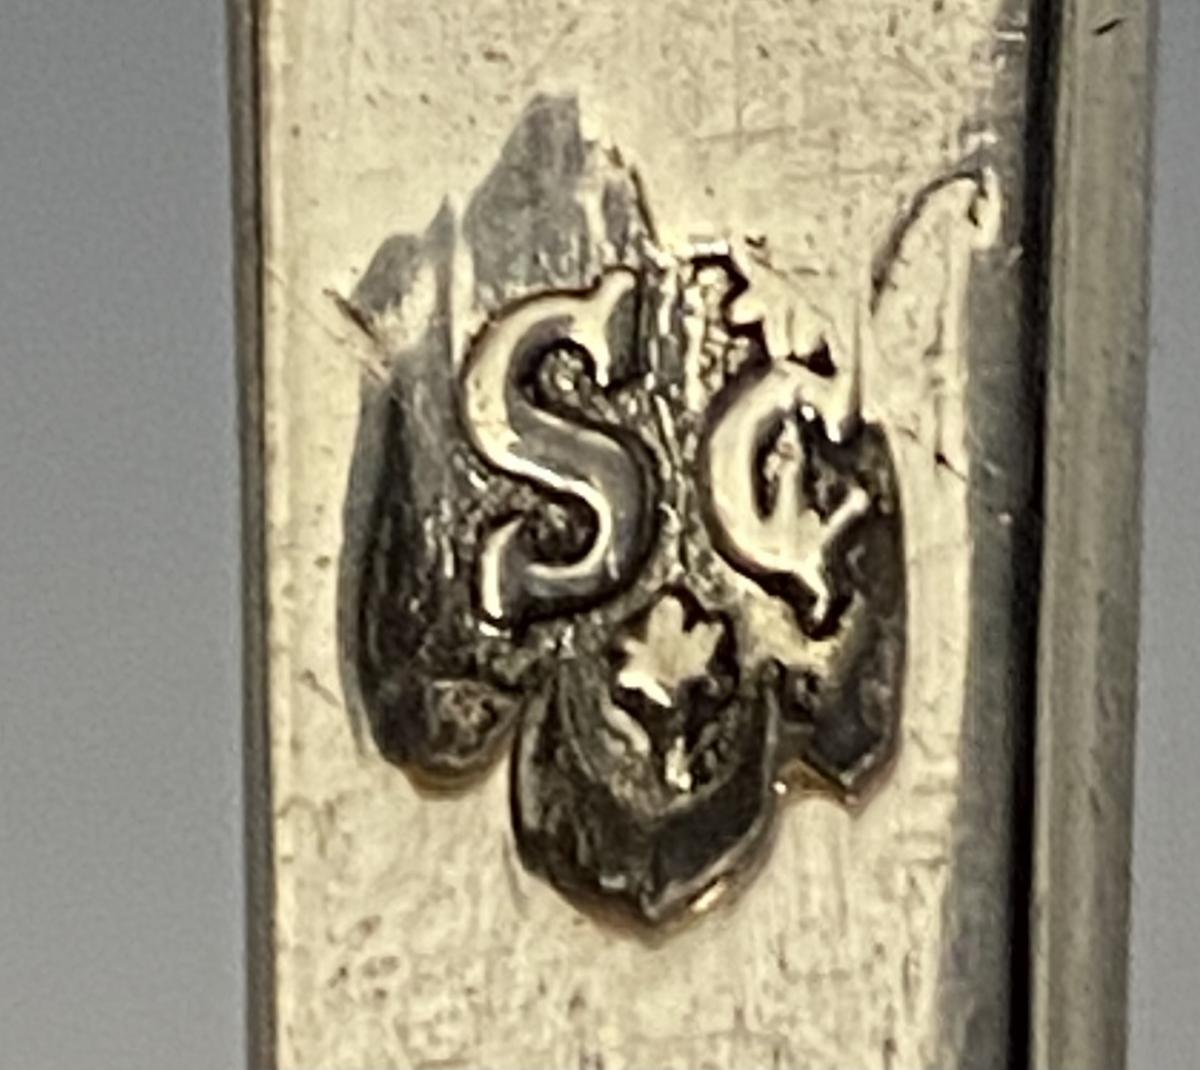  Pair of silver trefid spoon Richard Scarlett of London 1707